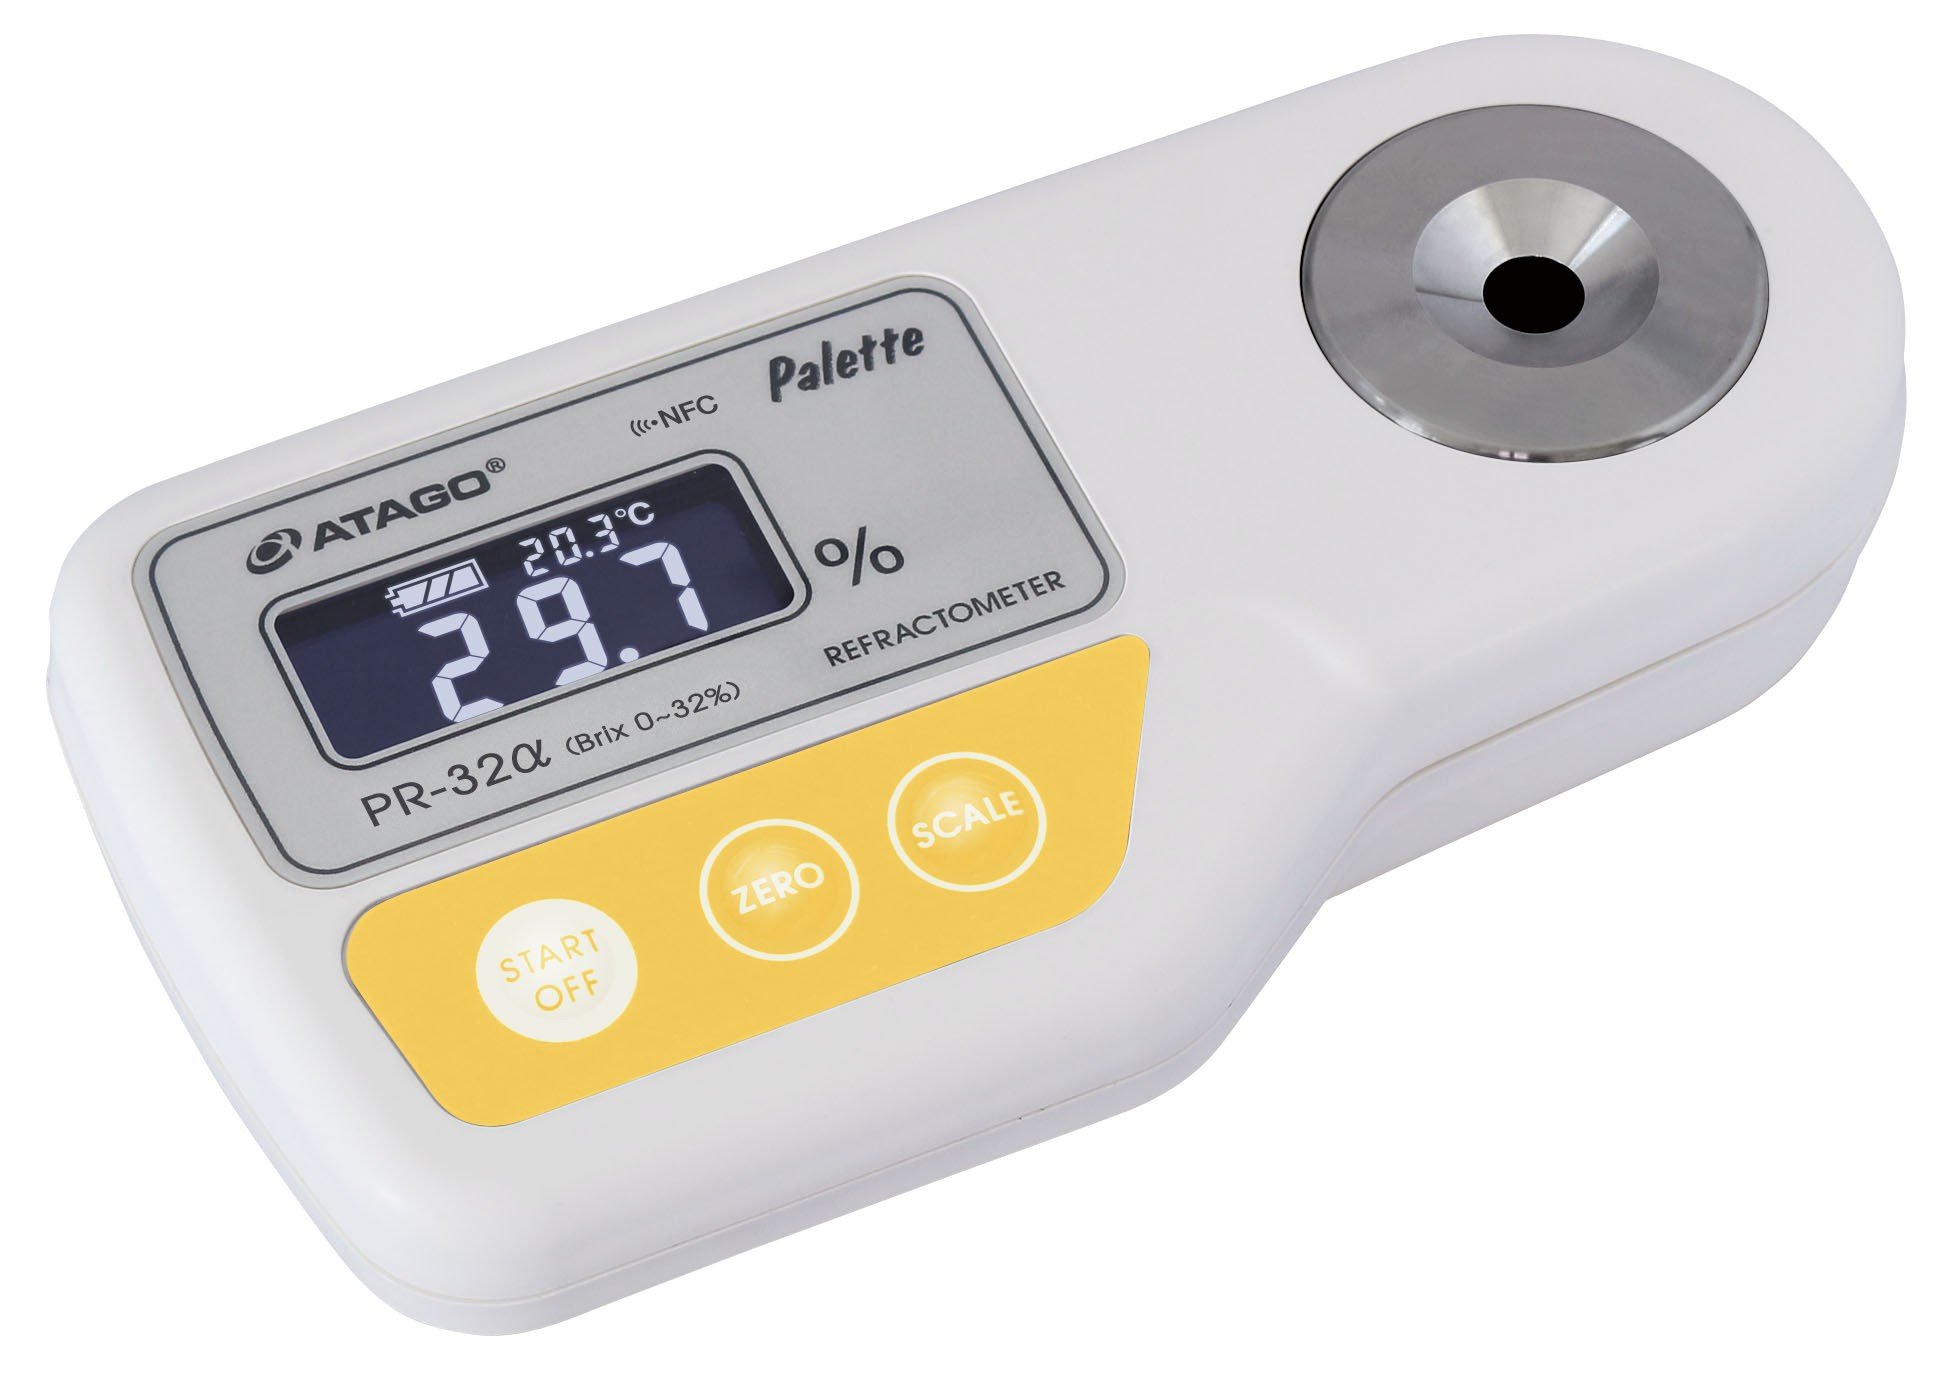 Atago 3405 PR-32a, Digital Portable Brix Refractometer, PALETTE Series, Brix : 0.0 to 32.0% Measurement Range